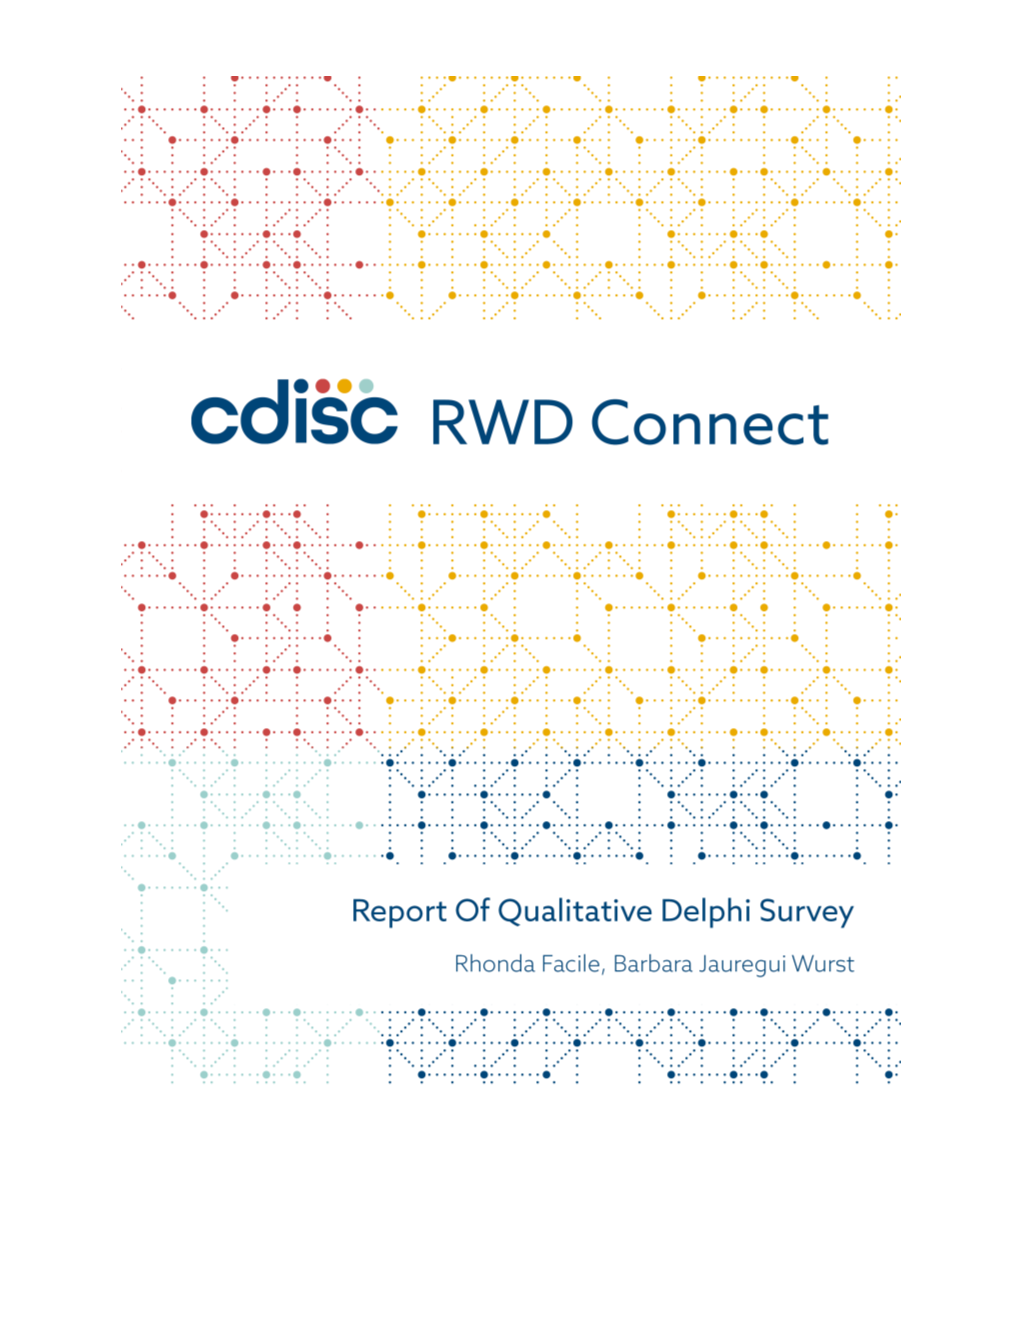 CDISC RWD Connect Report of Qualitative Delphi Survey Consultation to Expert Advisory Board